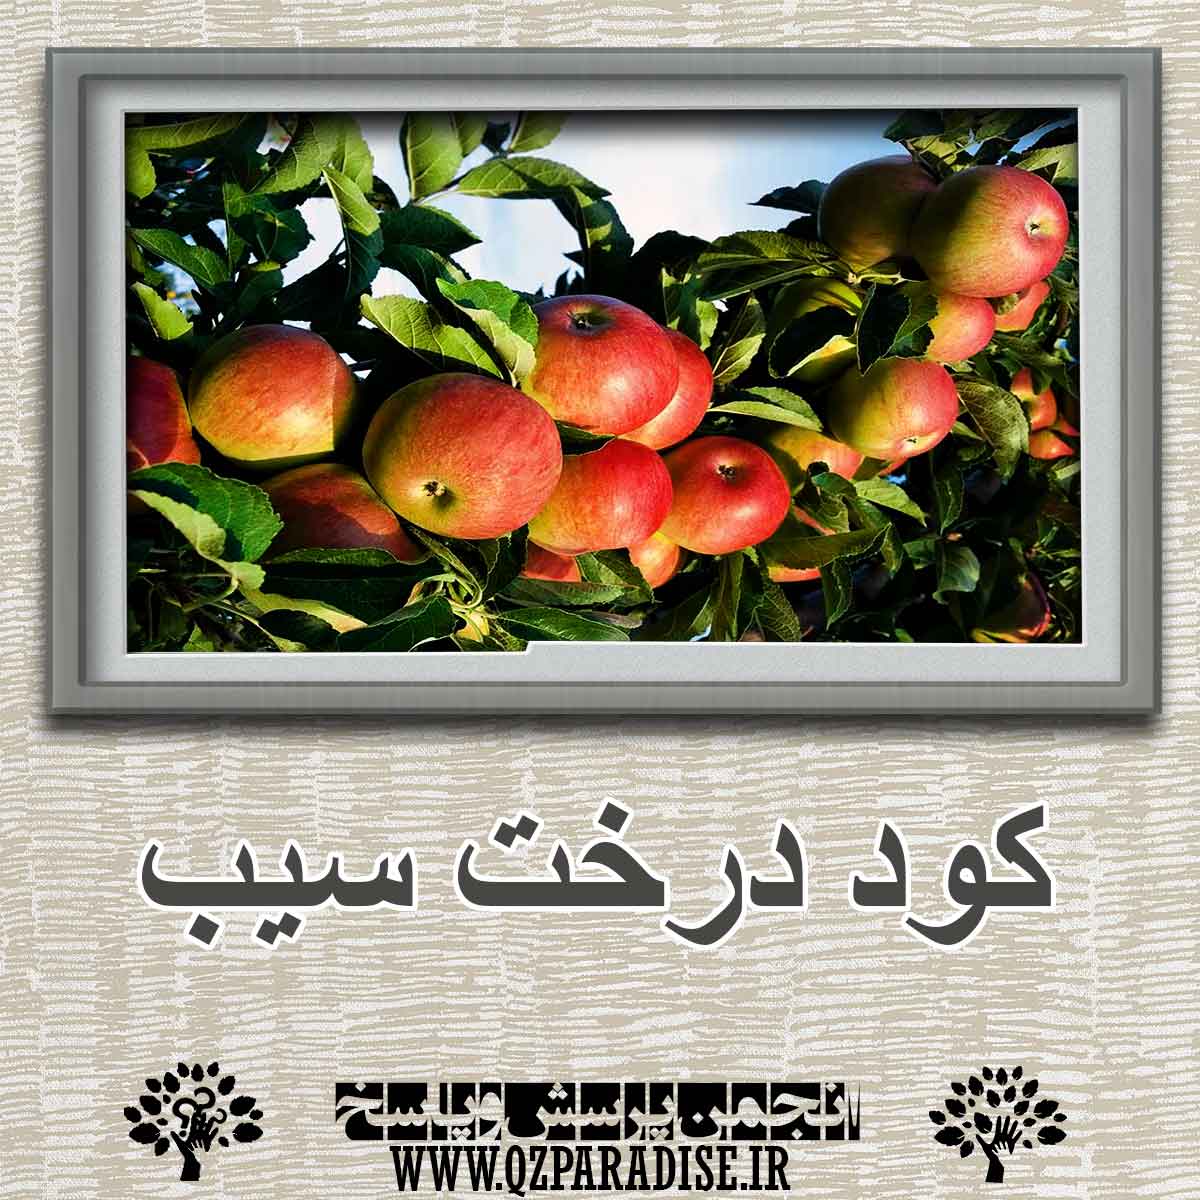 523af331a696aaff4b2a827a9fedcc4351847ba6 290 - بهترین کود برای درخت سیب چیست؟